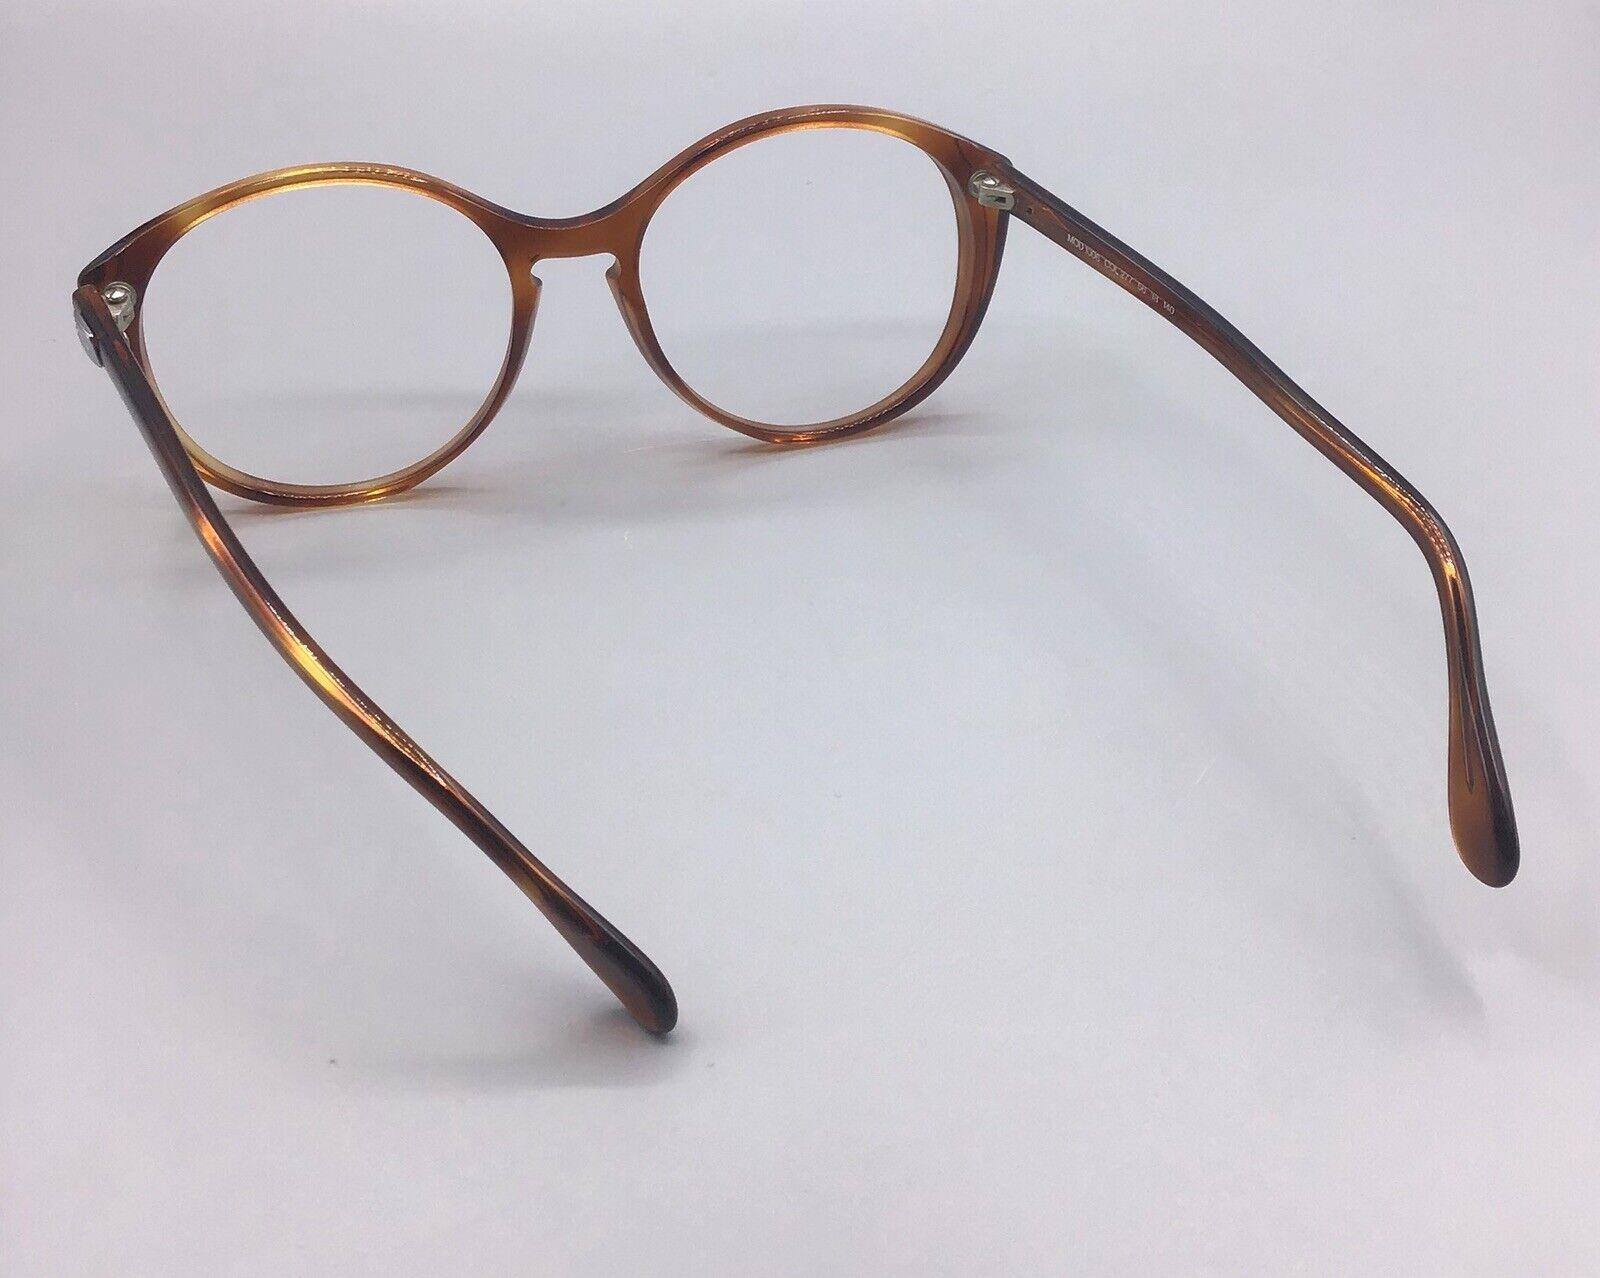 Silhouette Eyewear Glasses Occhiale Vintage Brillen Austria frame Model 1006 colore 277